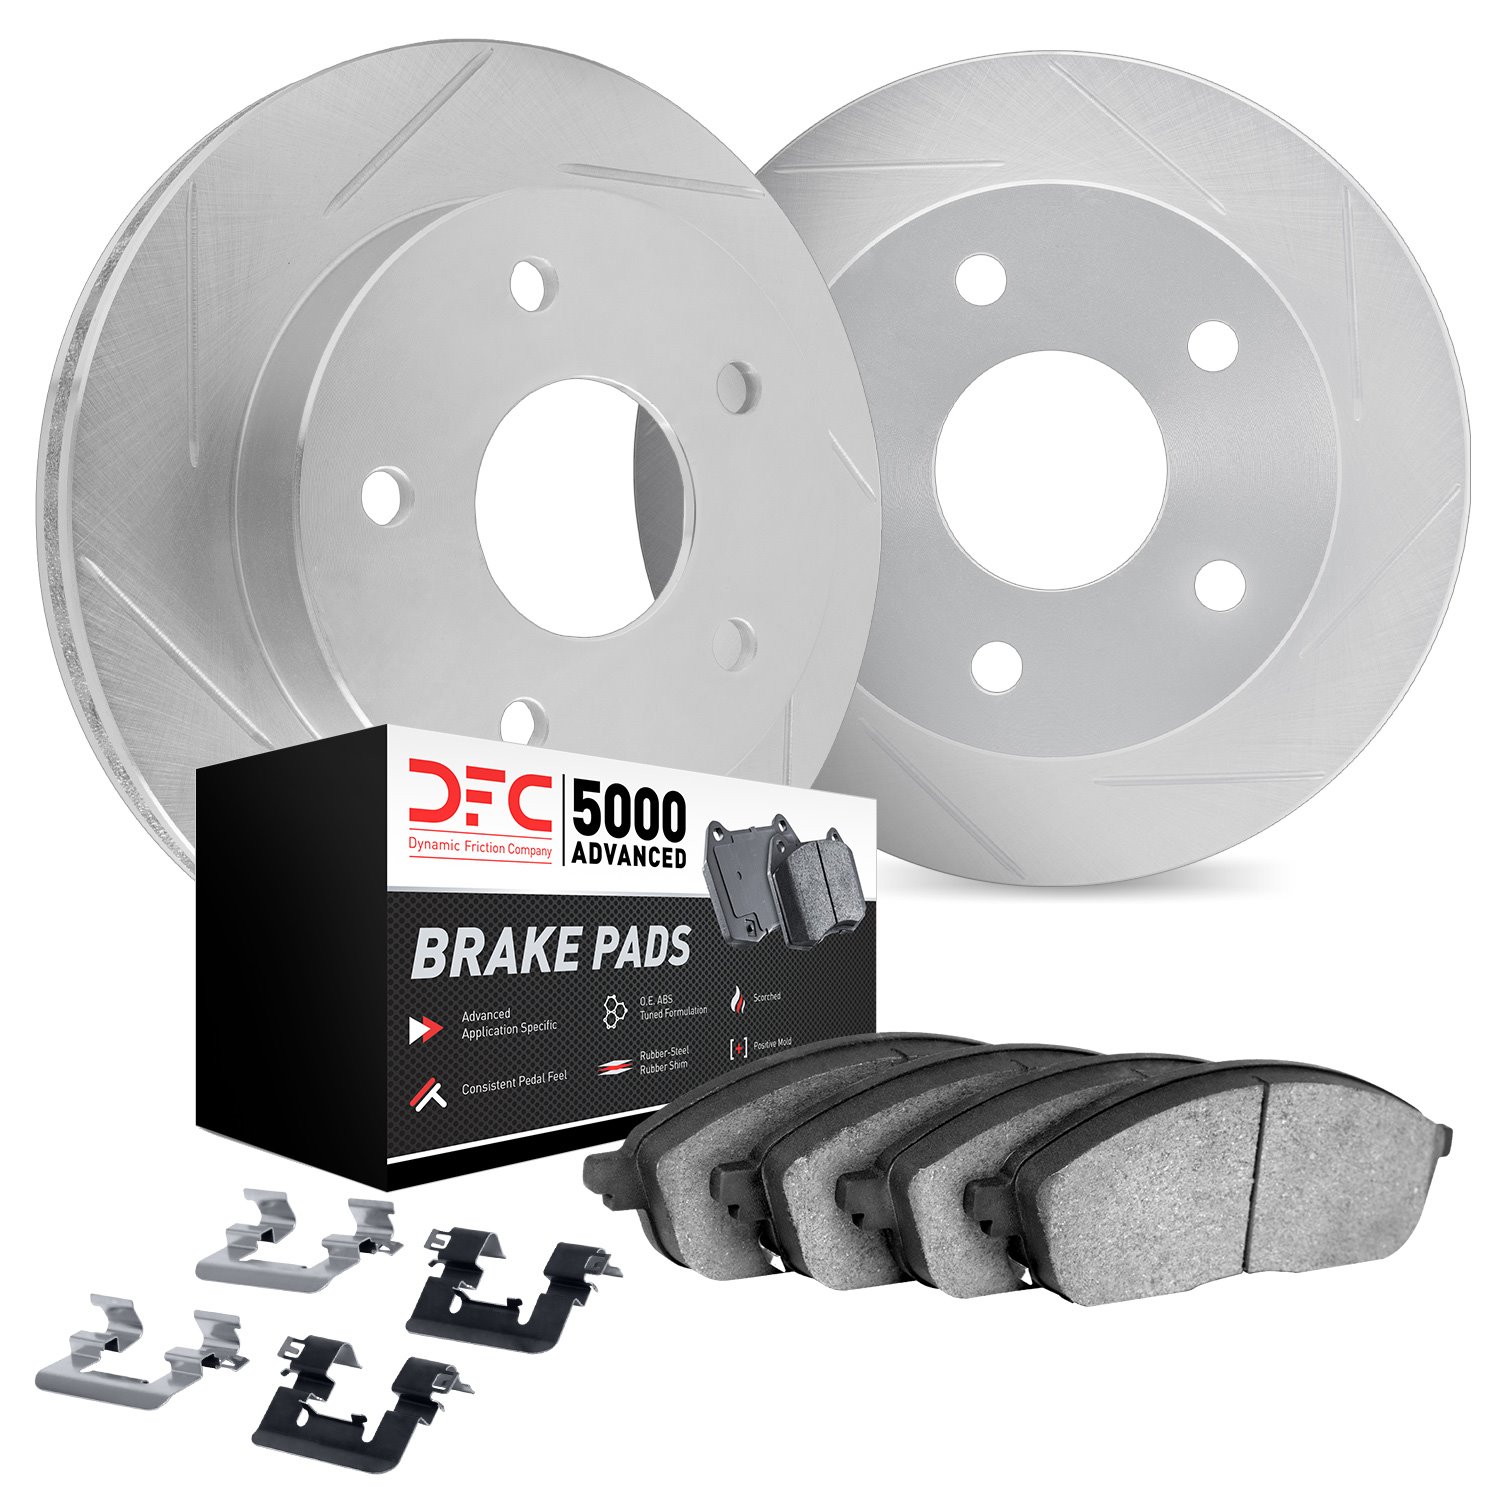 5512-67130 Slotted Brake Rotors w/5000 Advanced Brake Pads Kit & Hardware [Silver], Fits Select Multiple Makes/Models, Position: